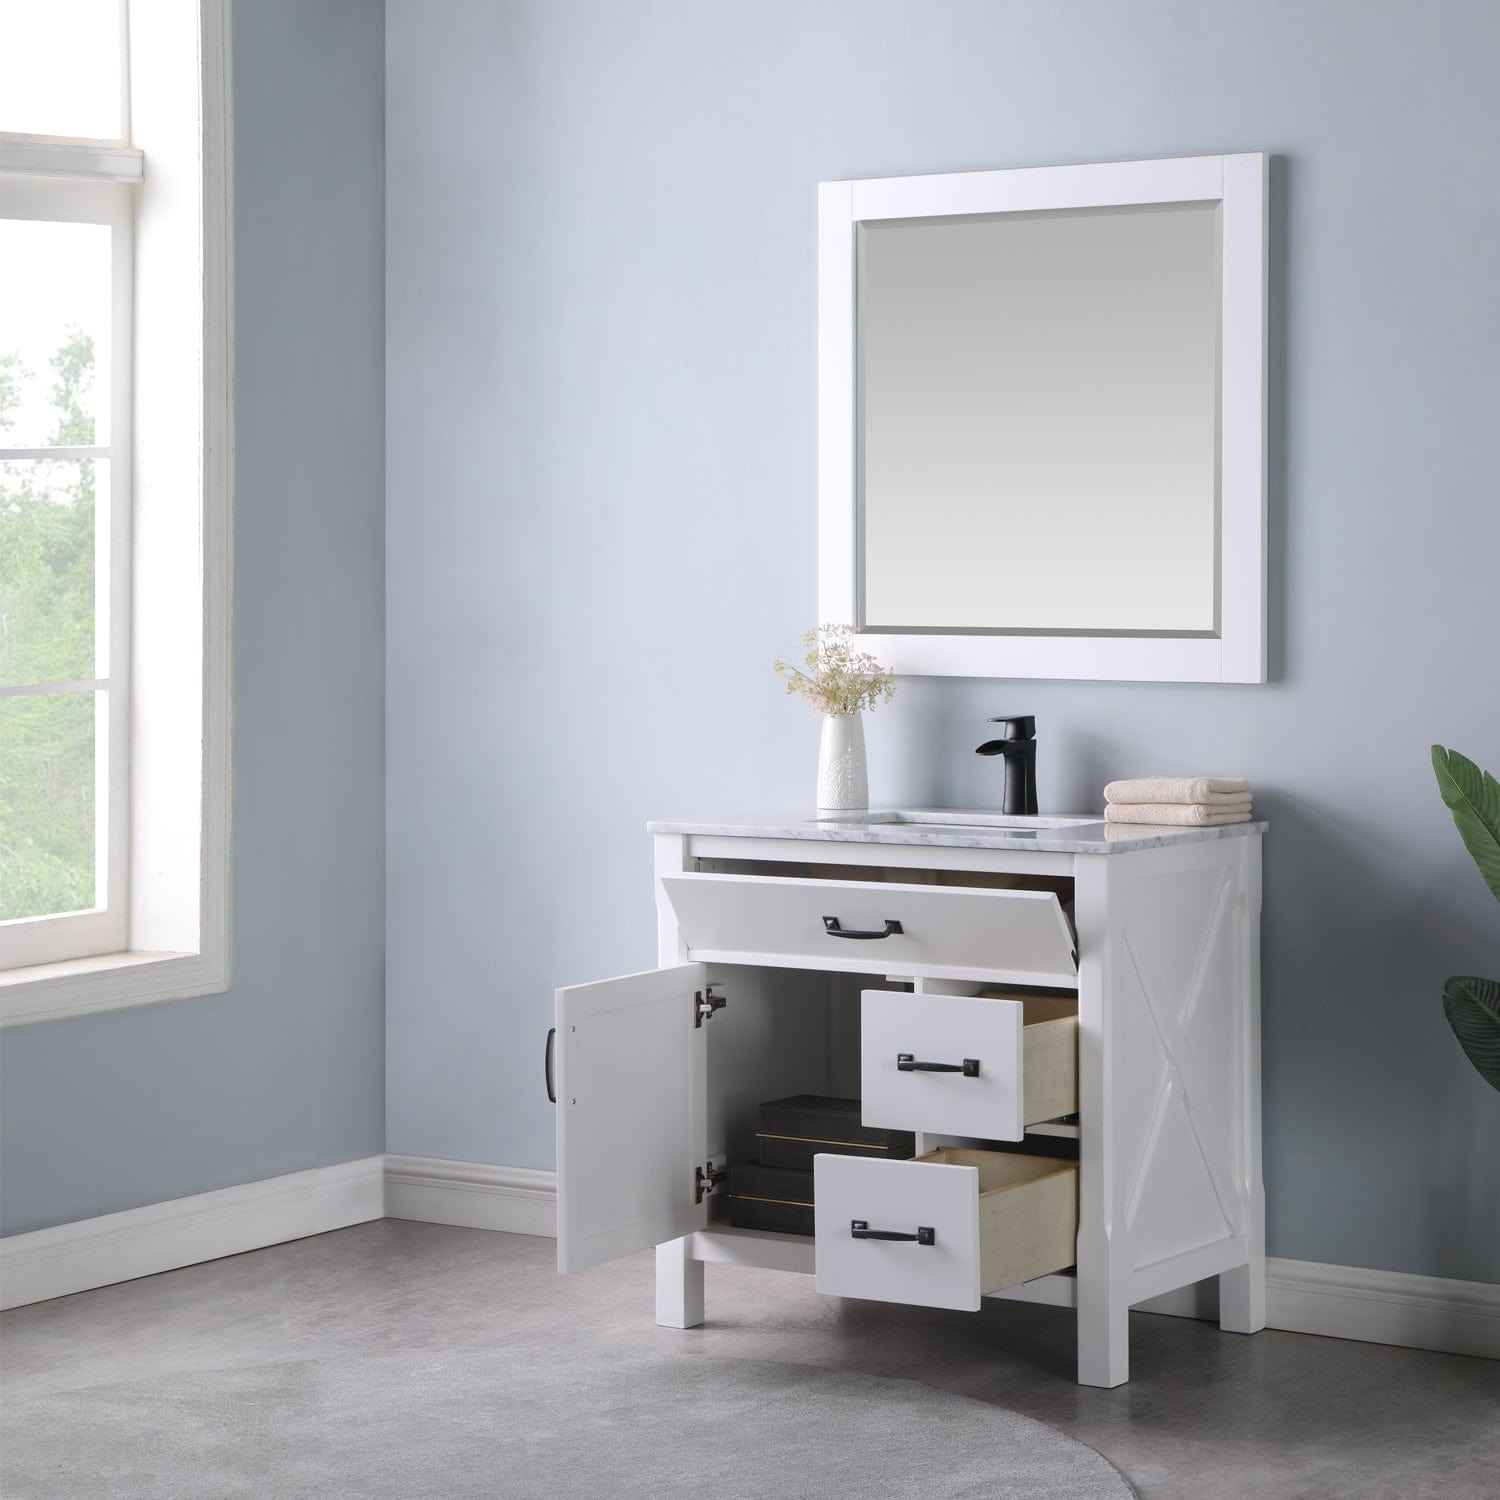 Altair Maribella 36" Single Bathroom Vanity Set in White and Carrara White Marble Countertop with Mirror 535036-WH-CA - Molaix631112970297Vanity535036-WH-CA